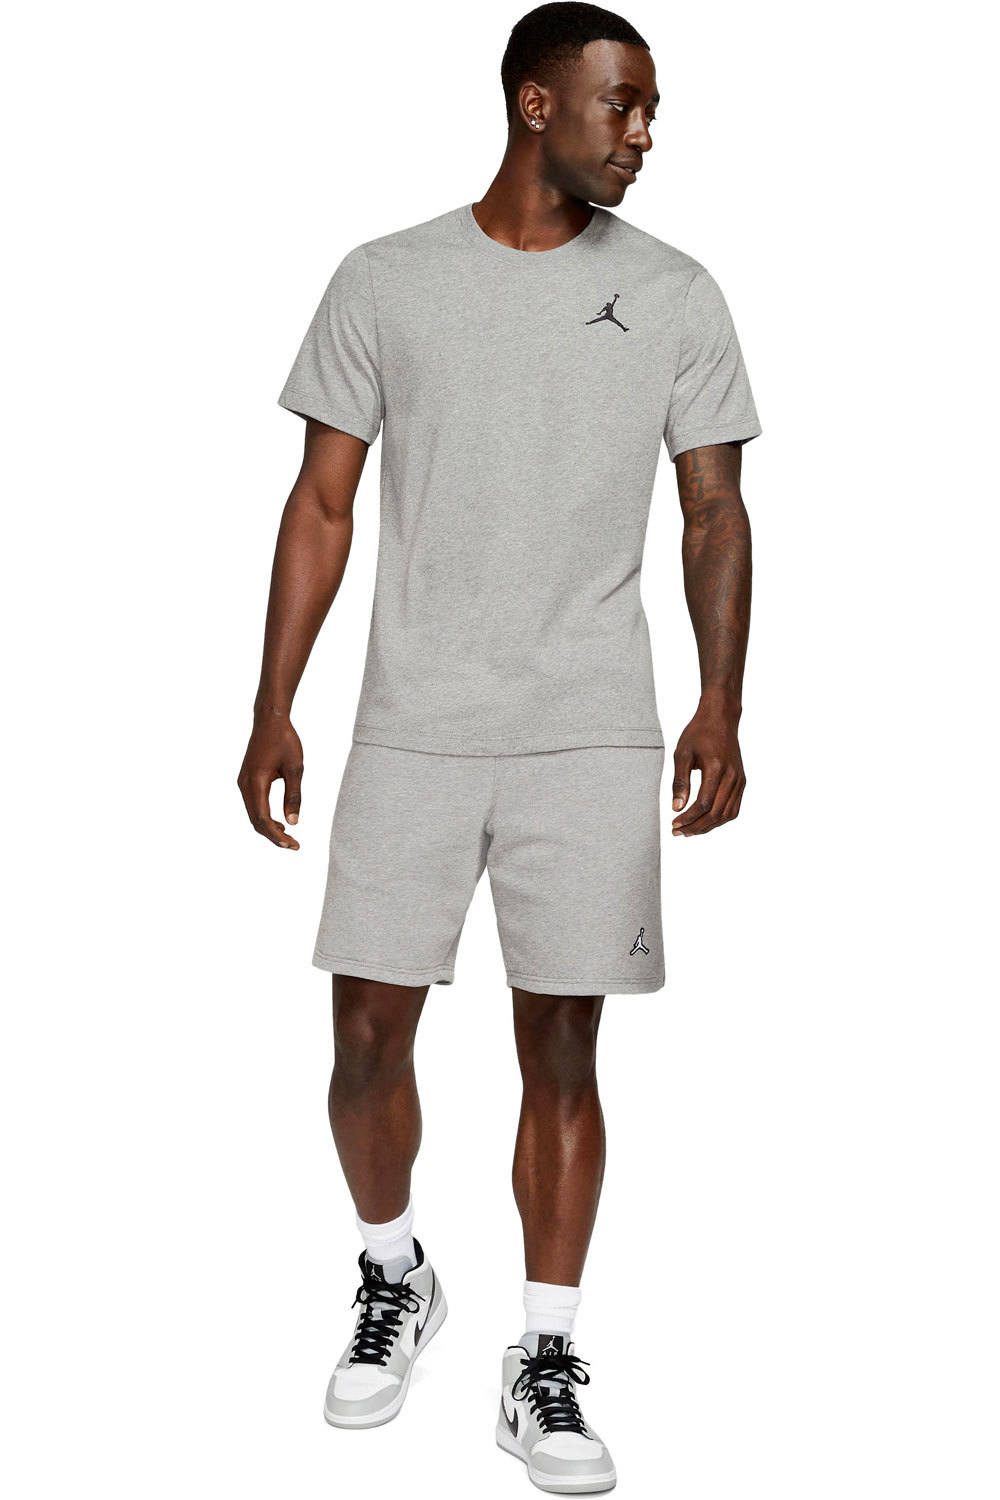 Nike camiseta baloncesto M J JUMPMAN SS CREW 6 vista detalle